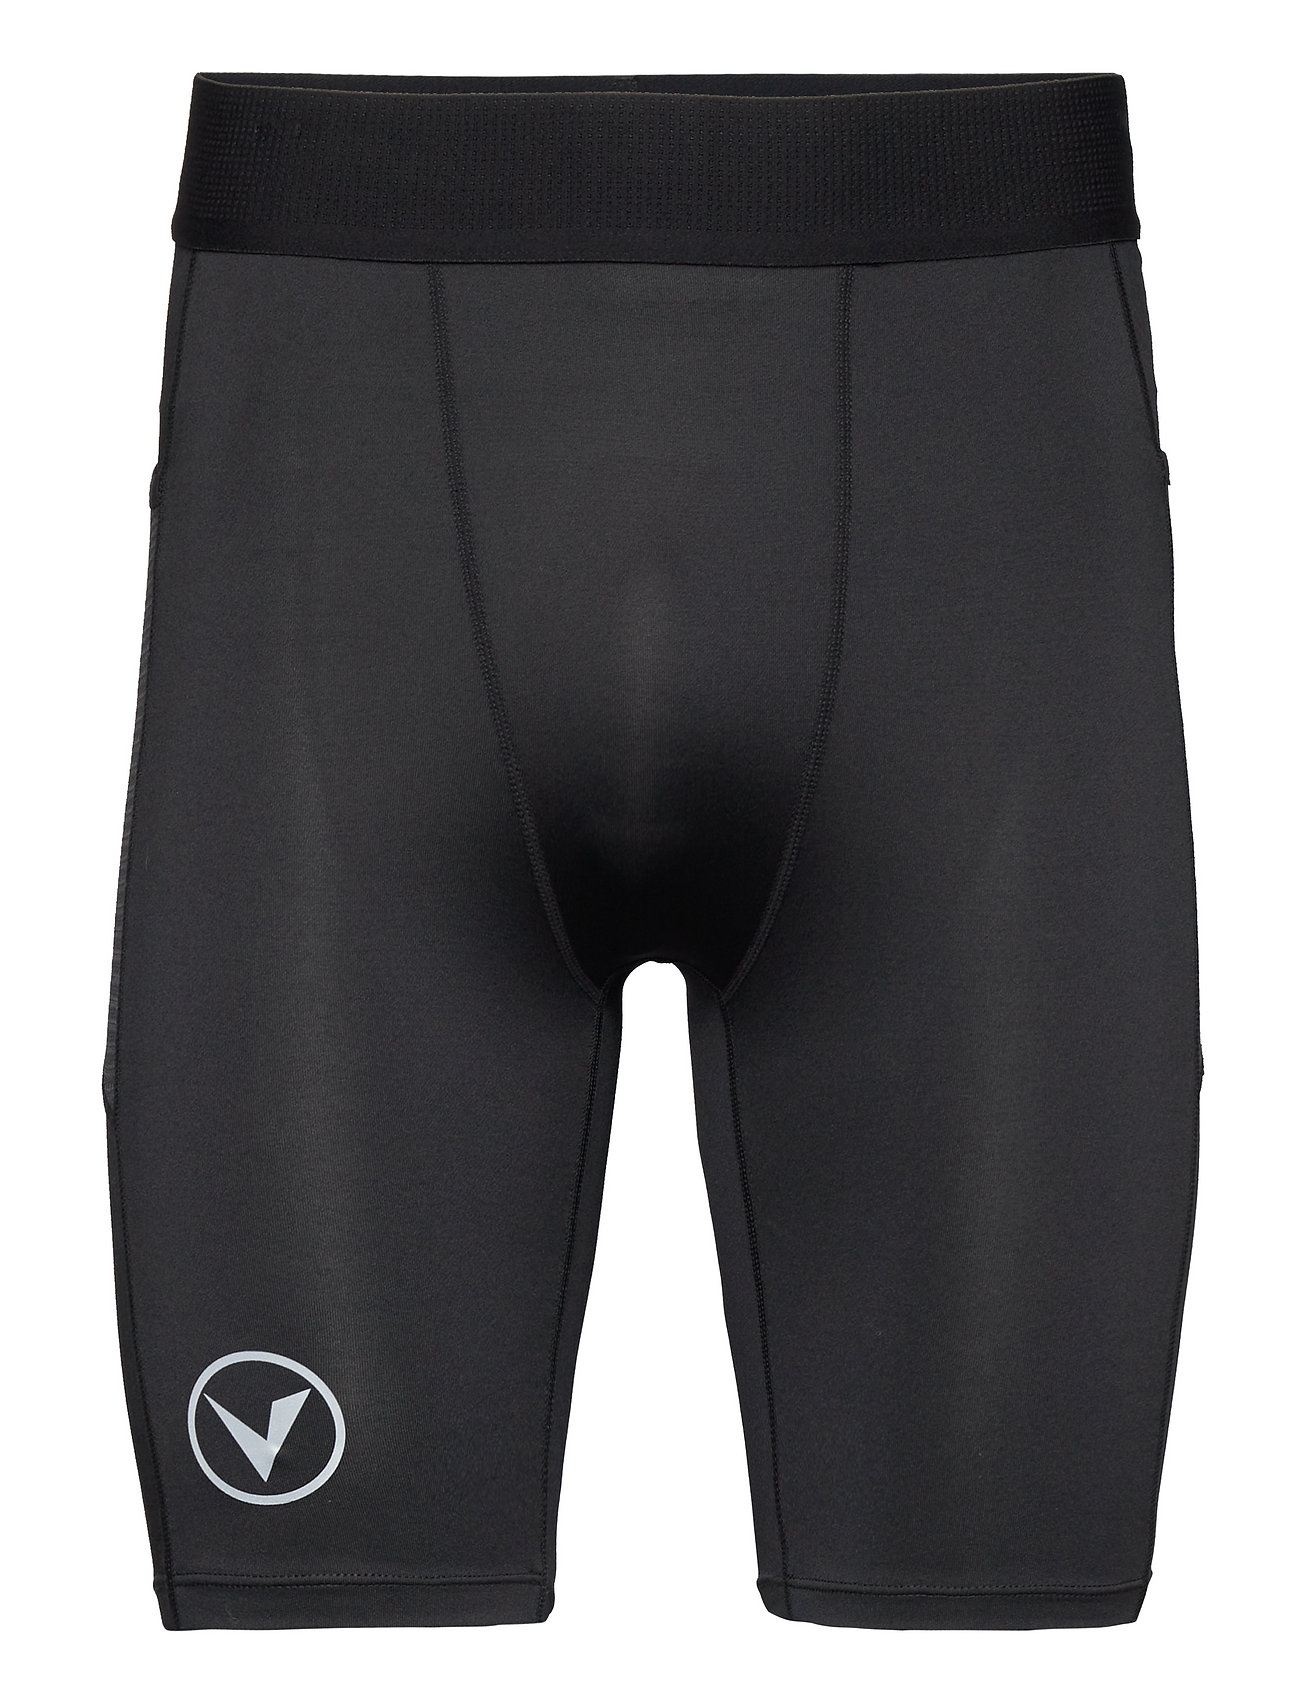 Bonder M Baselayer Shorts W/Pocket Sport Base Layer Bottoms Black Virtus